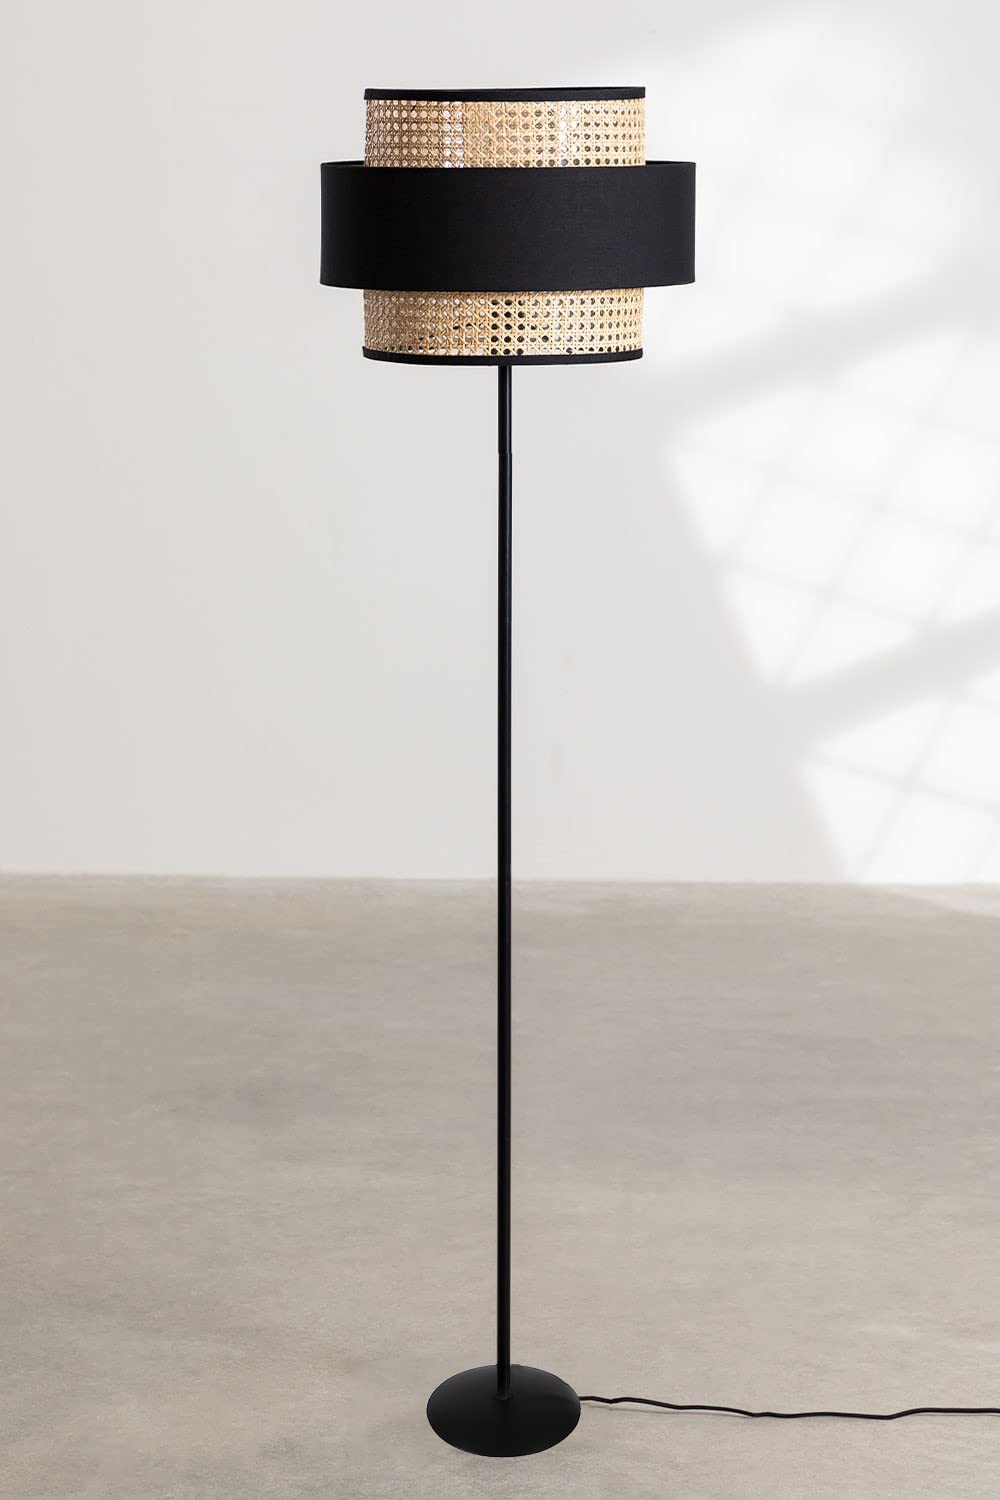 AKWAY Rattan Cane Webbing Floor Lamp Bamboo Floor Lamp Cane Floor Lamp Standing Lamp Wooden Standing lamp for Living Room Bedroom (14" D X 11") (Black Stand) (Black) - Akway